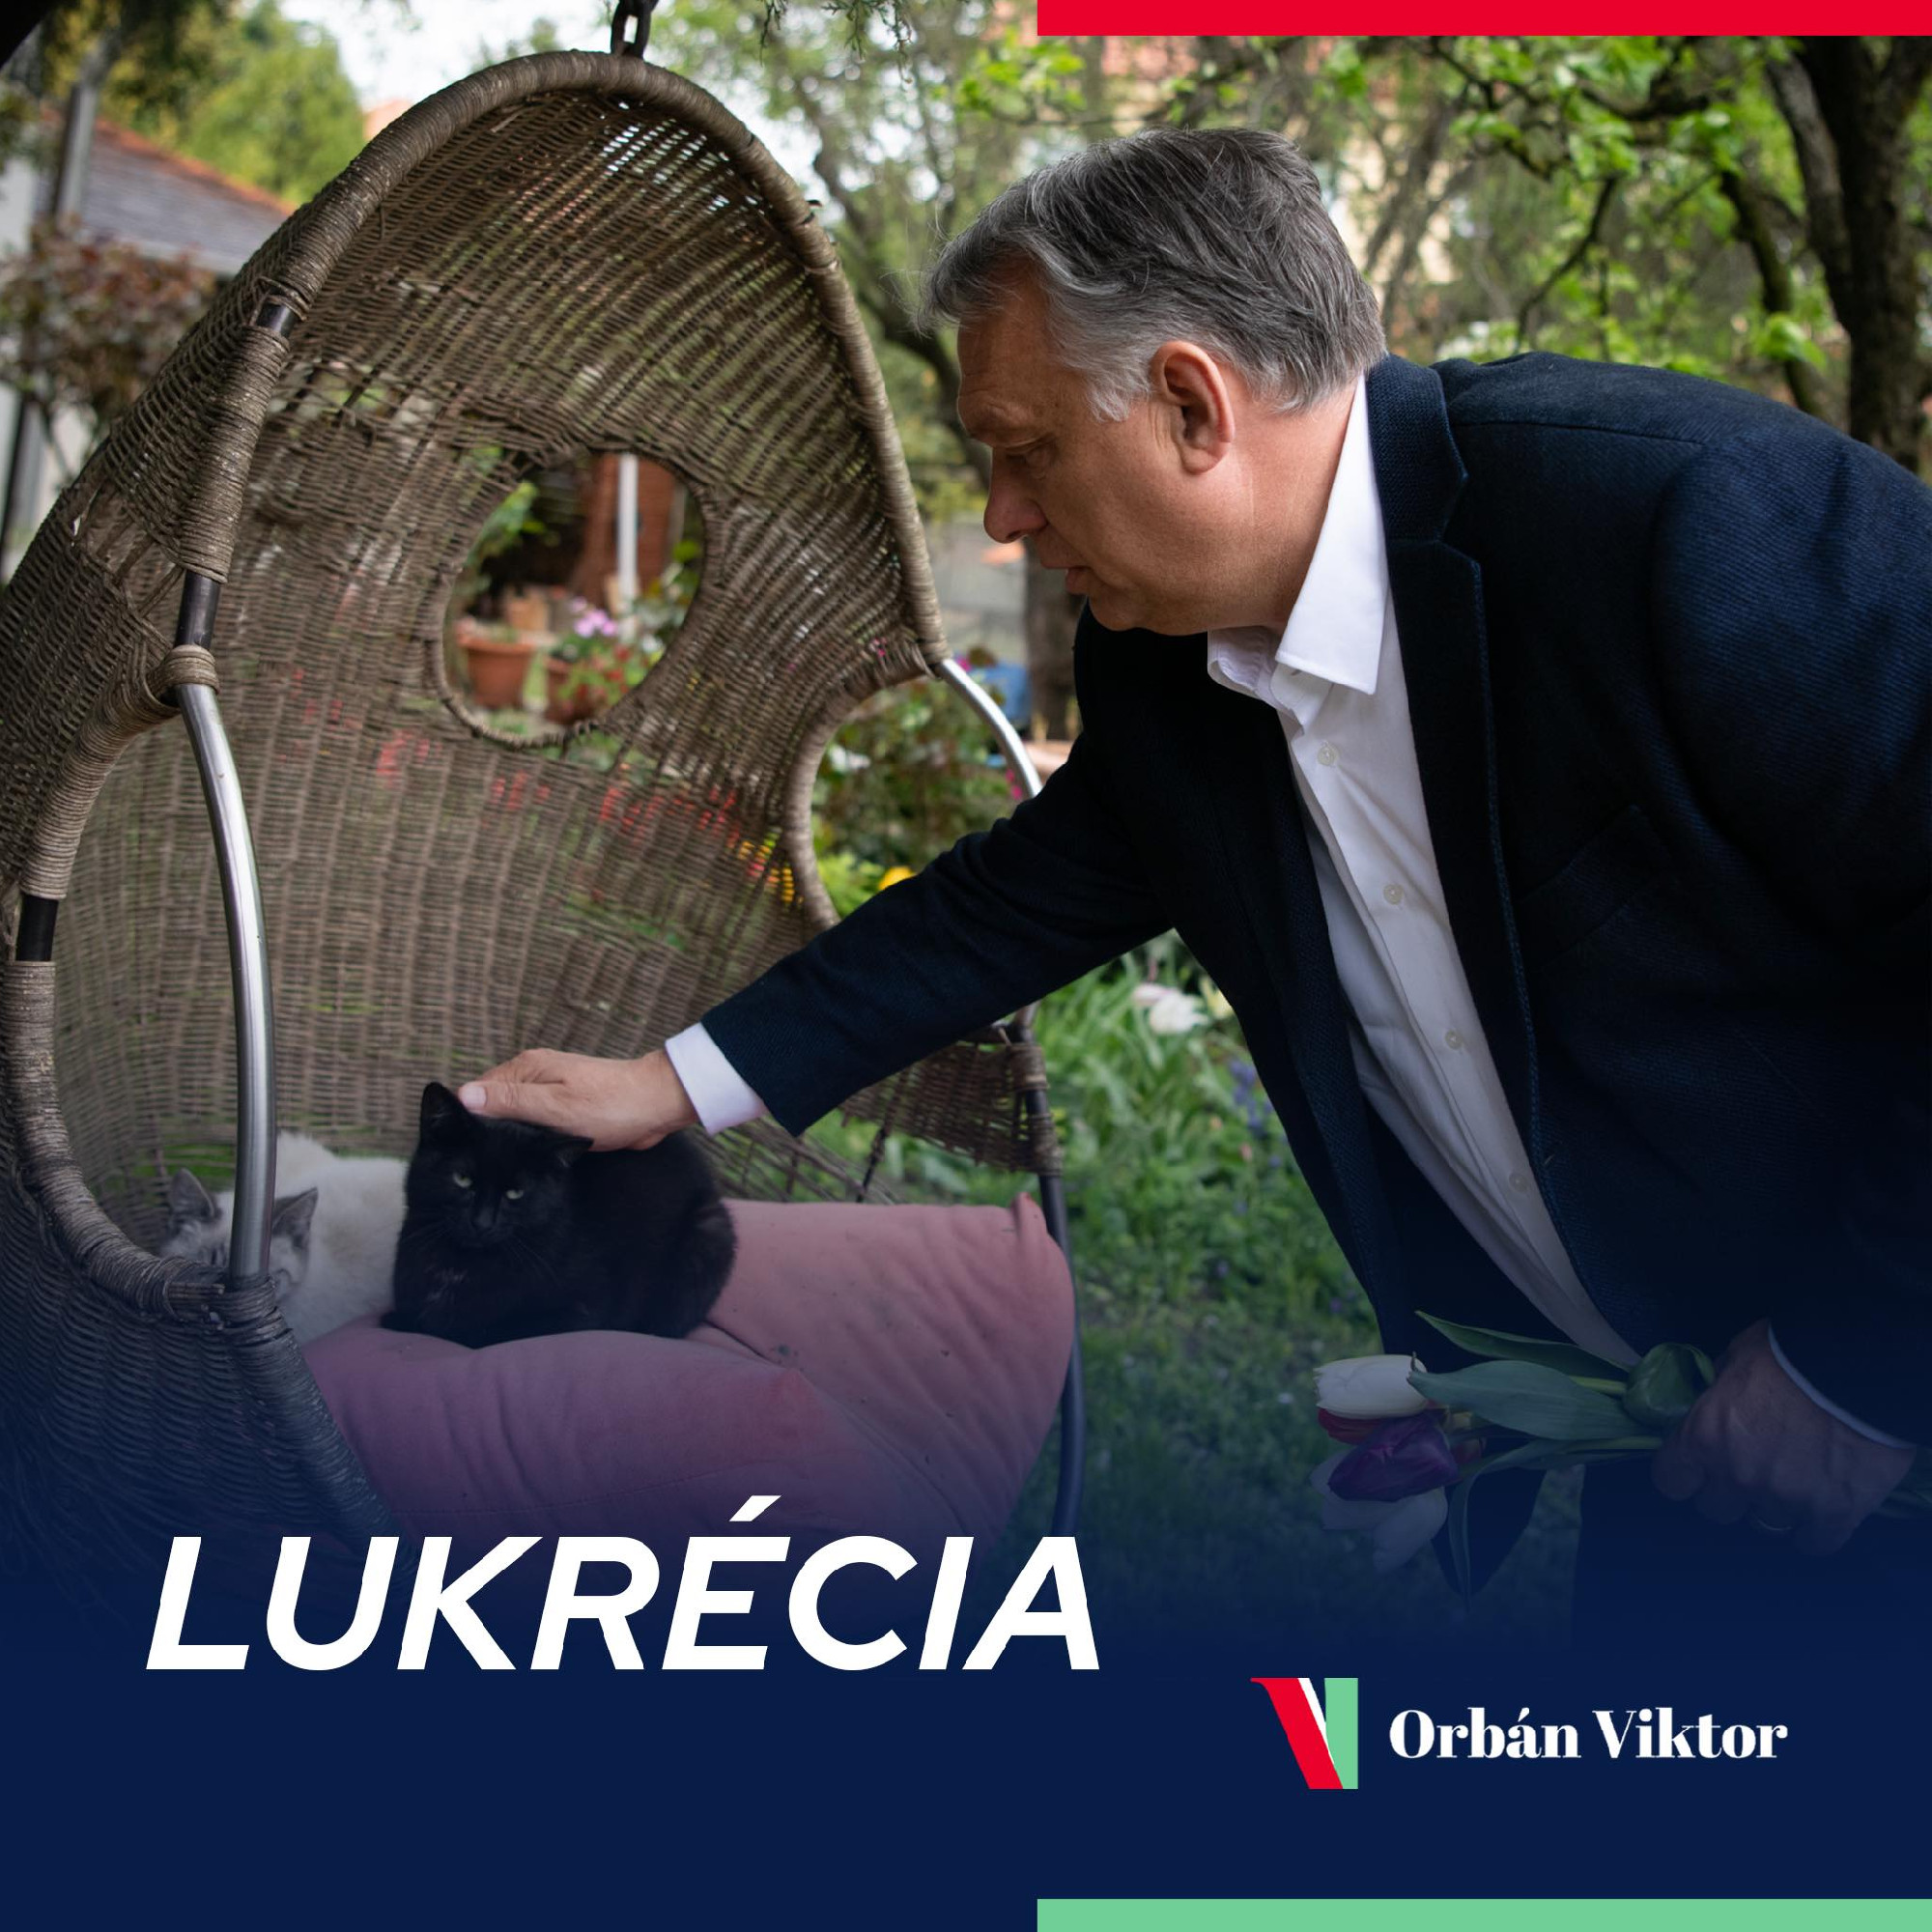 Orbán Viktor virággal köszöntötte Lukréciát